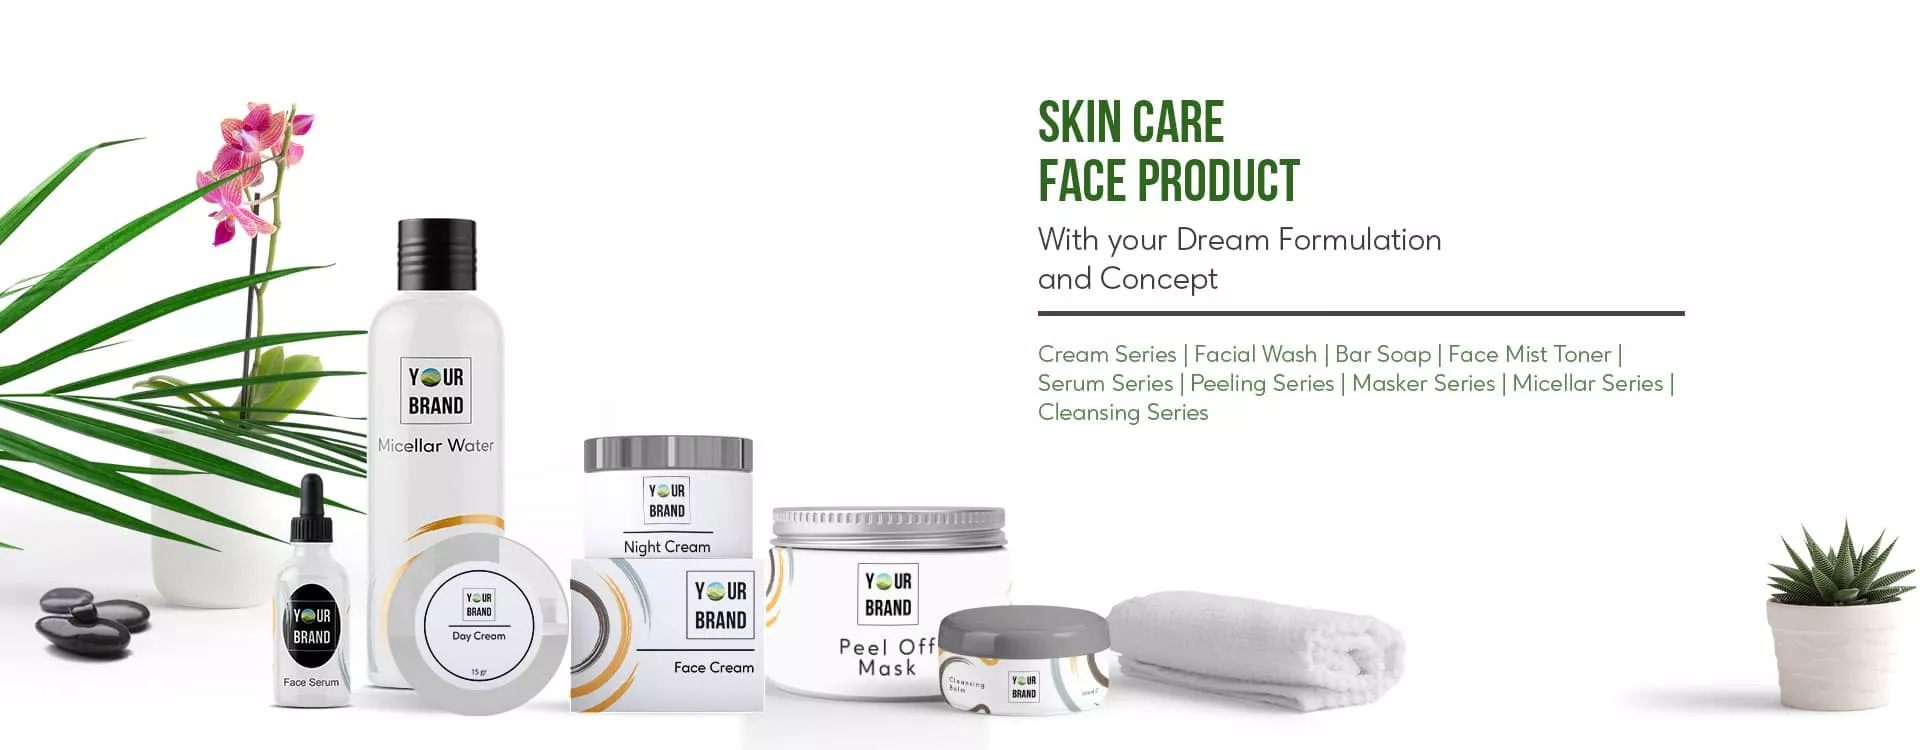 Skin-Care-Face-Product-web